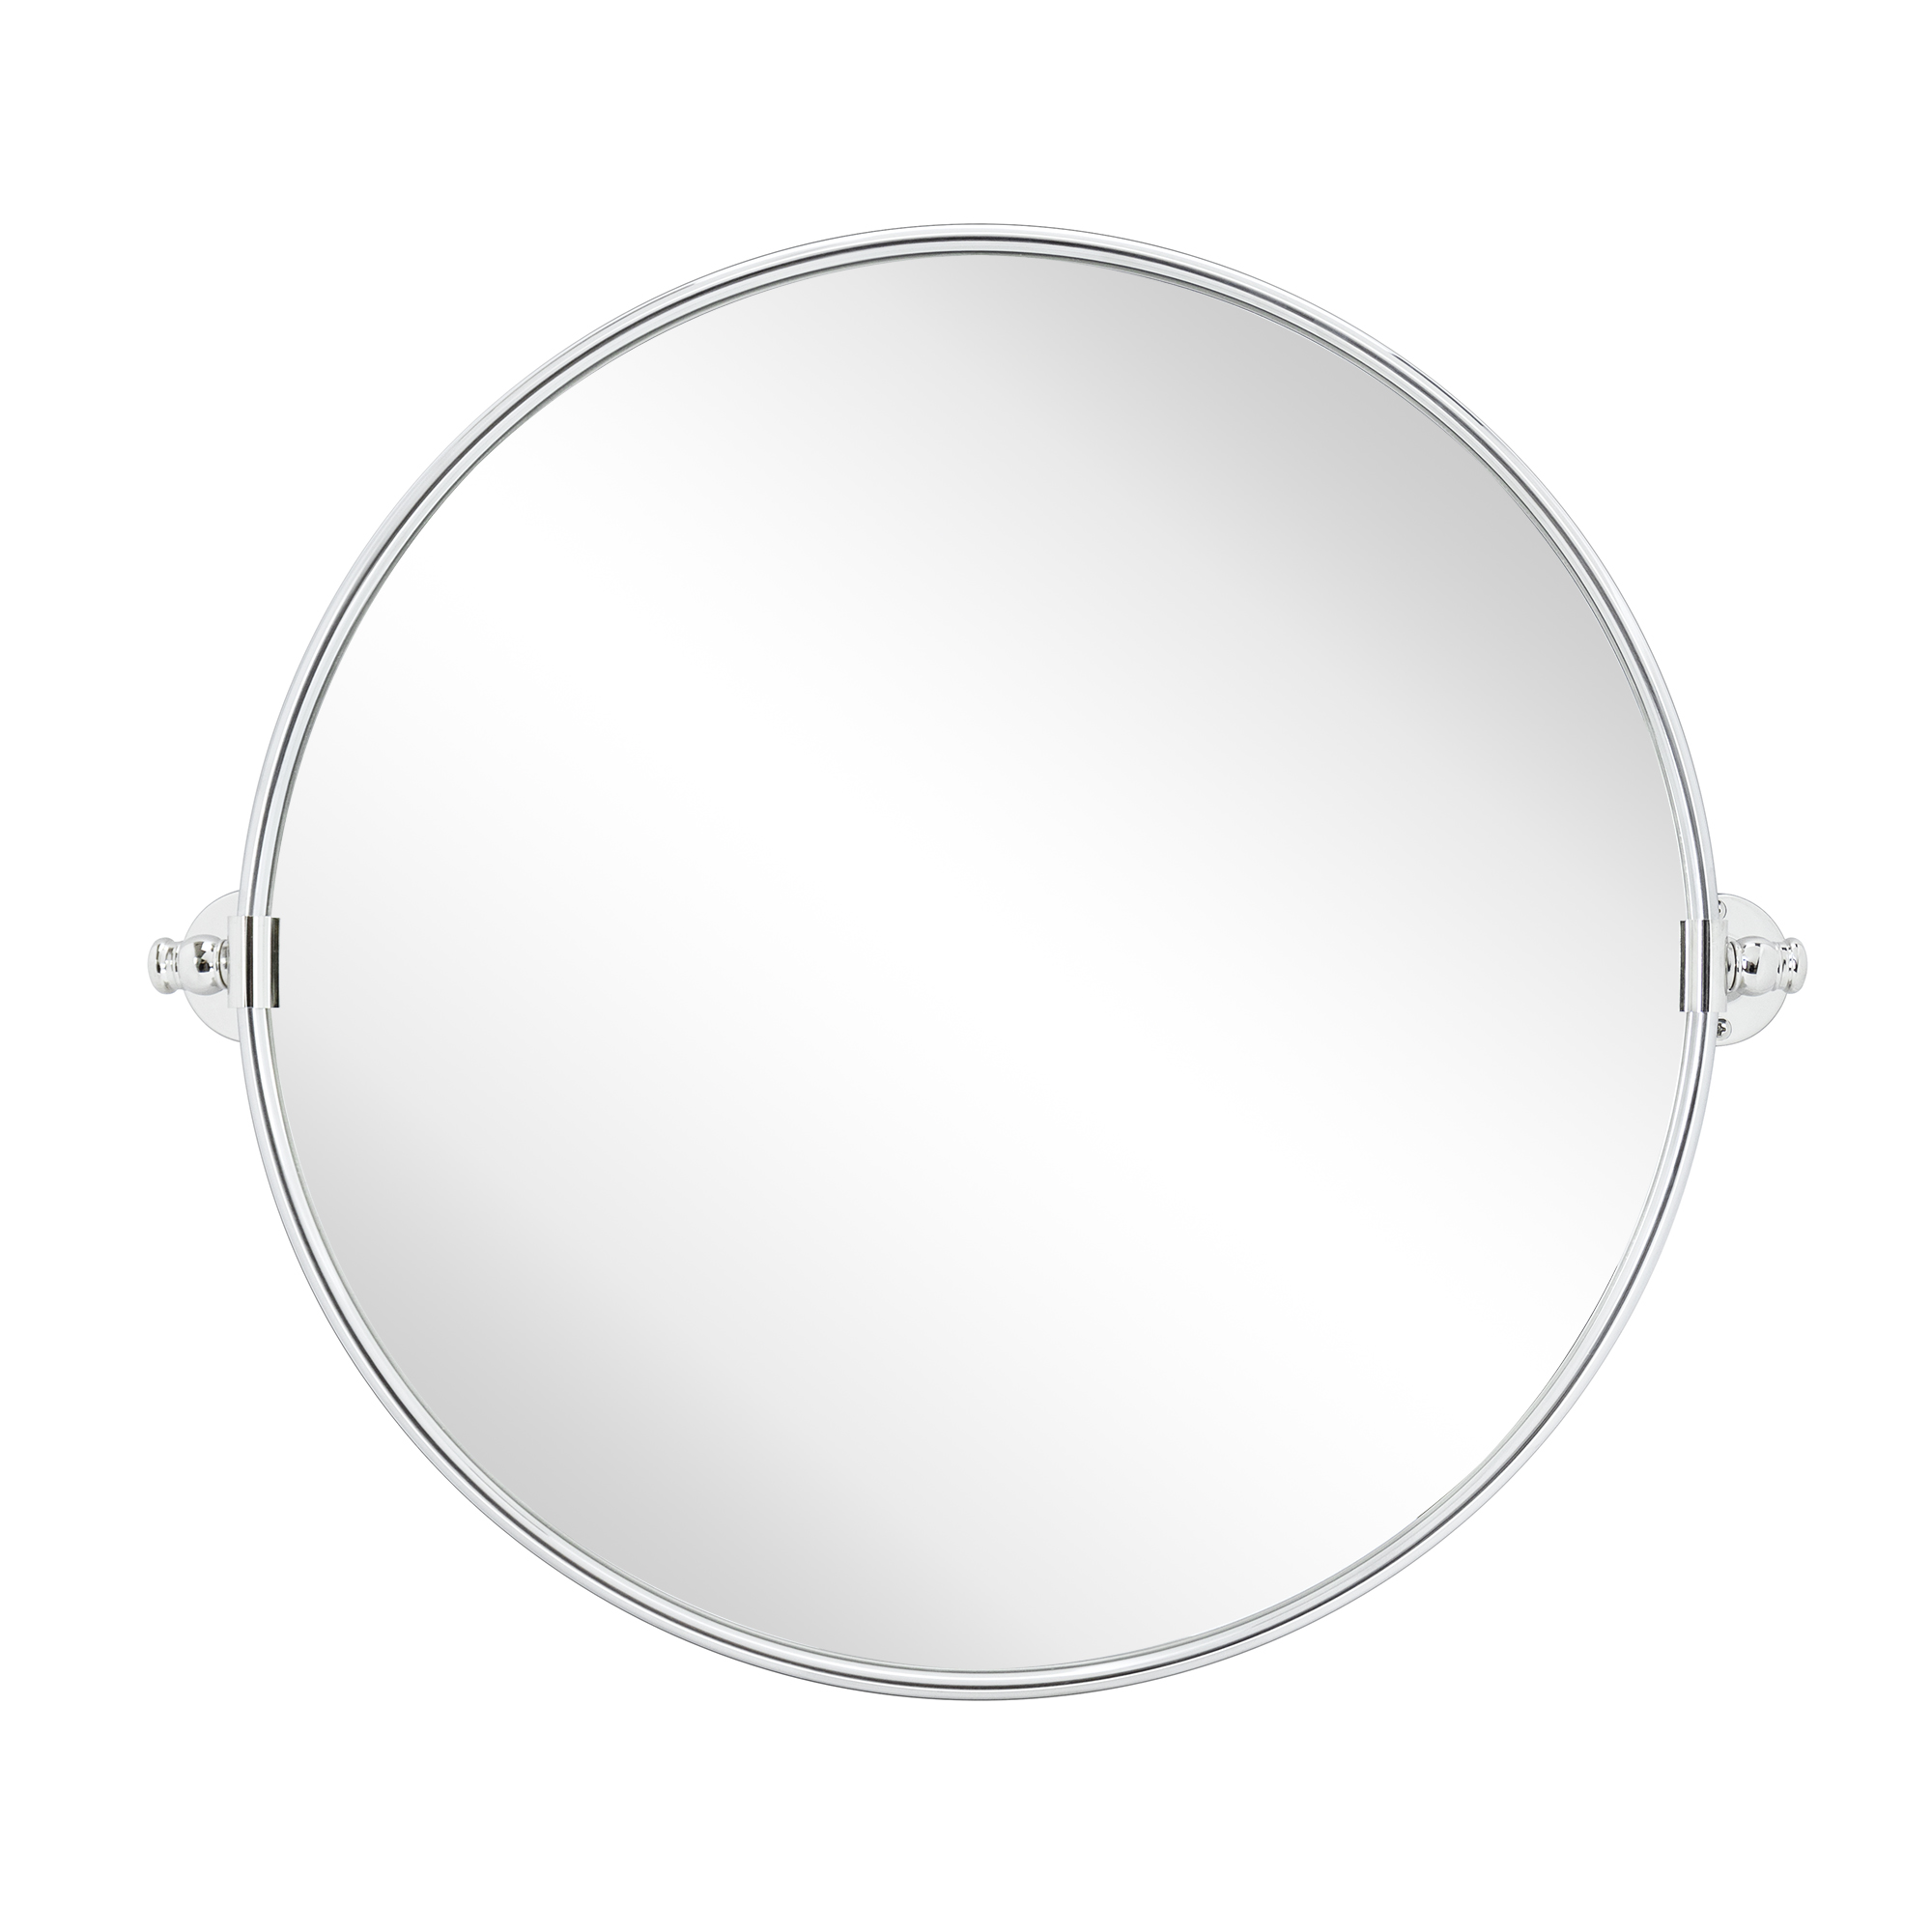 Adlina Round Metal Wall Mirror-24x24-Chrome